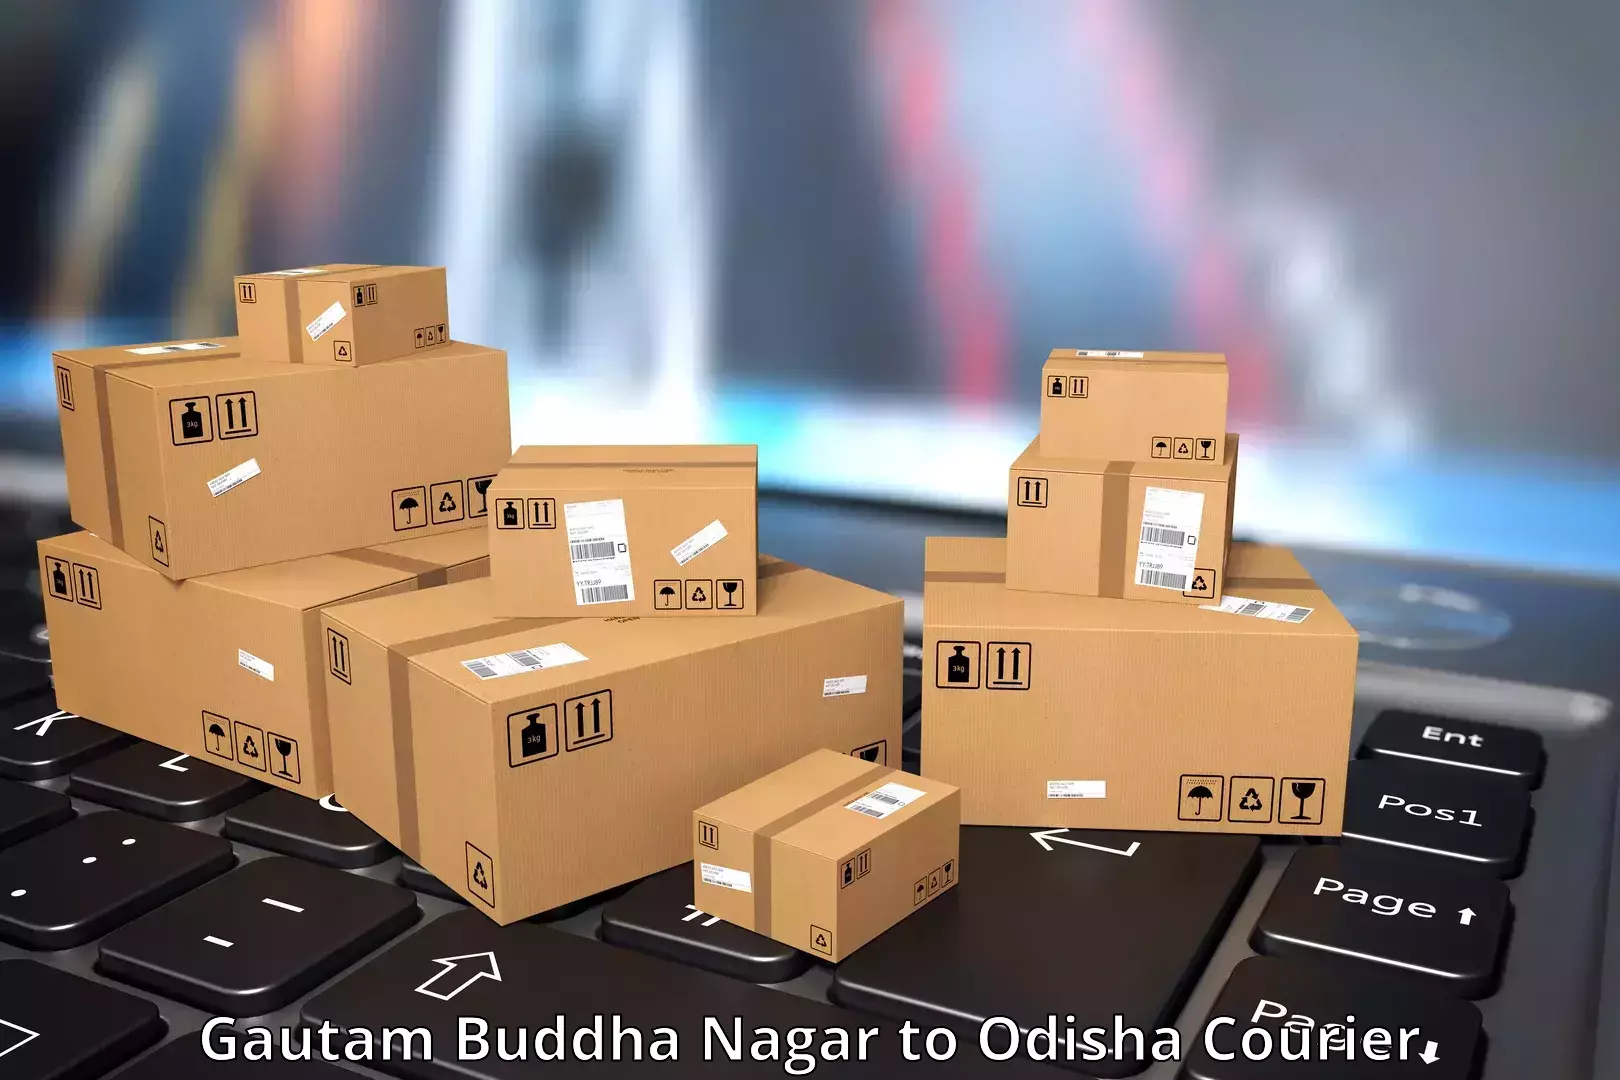 State-of-the-art courier technology Gautam Buddha Nagar to Madanpur Rampur